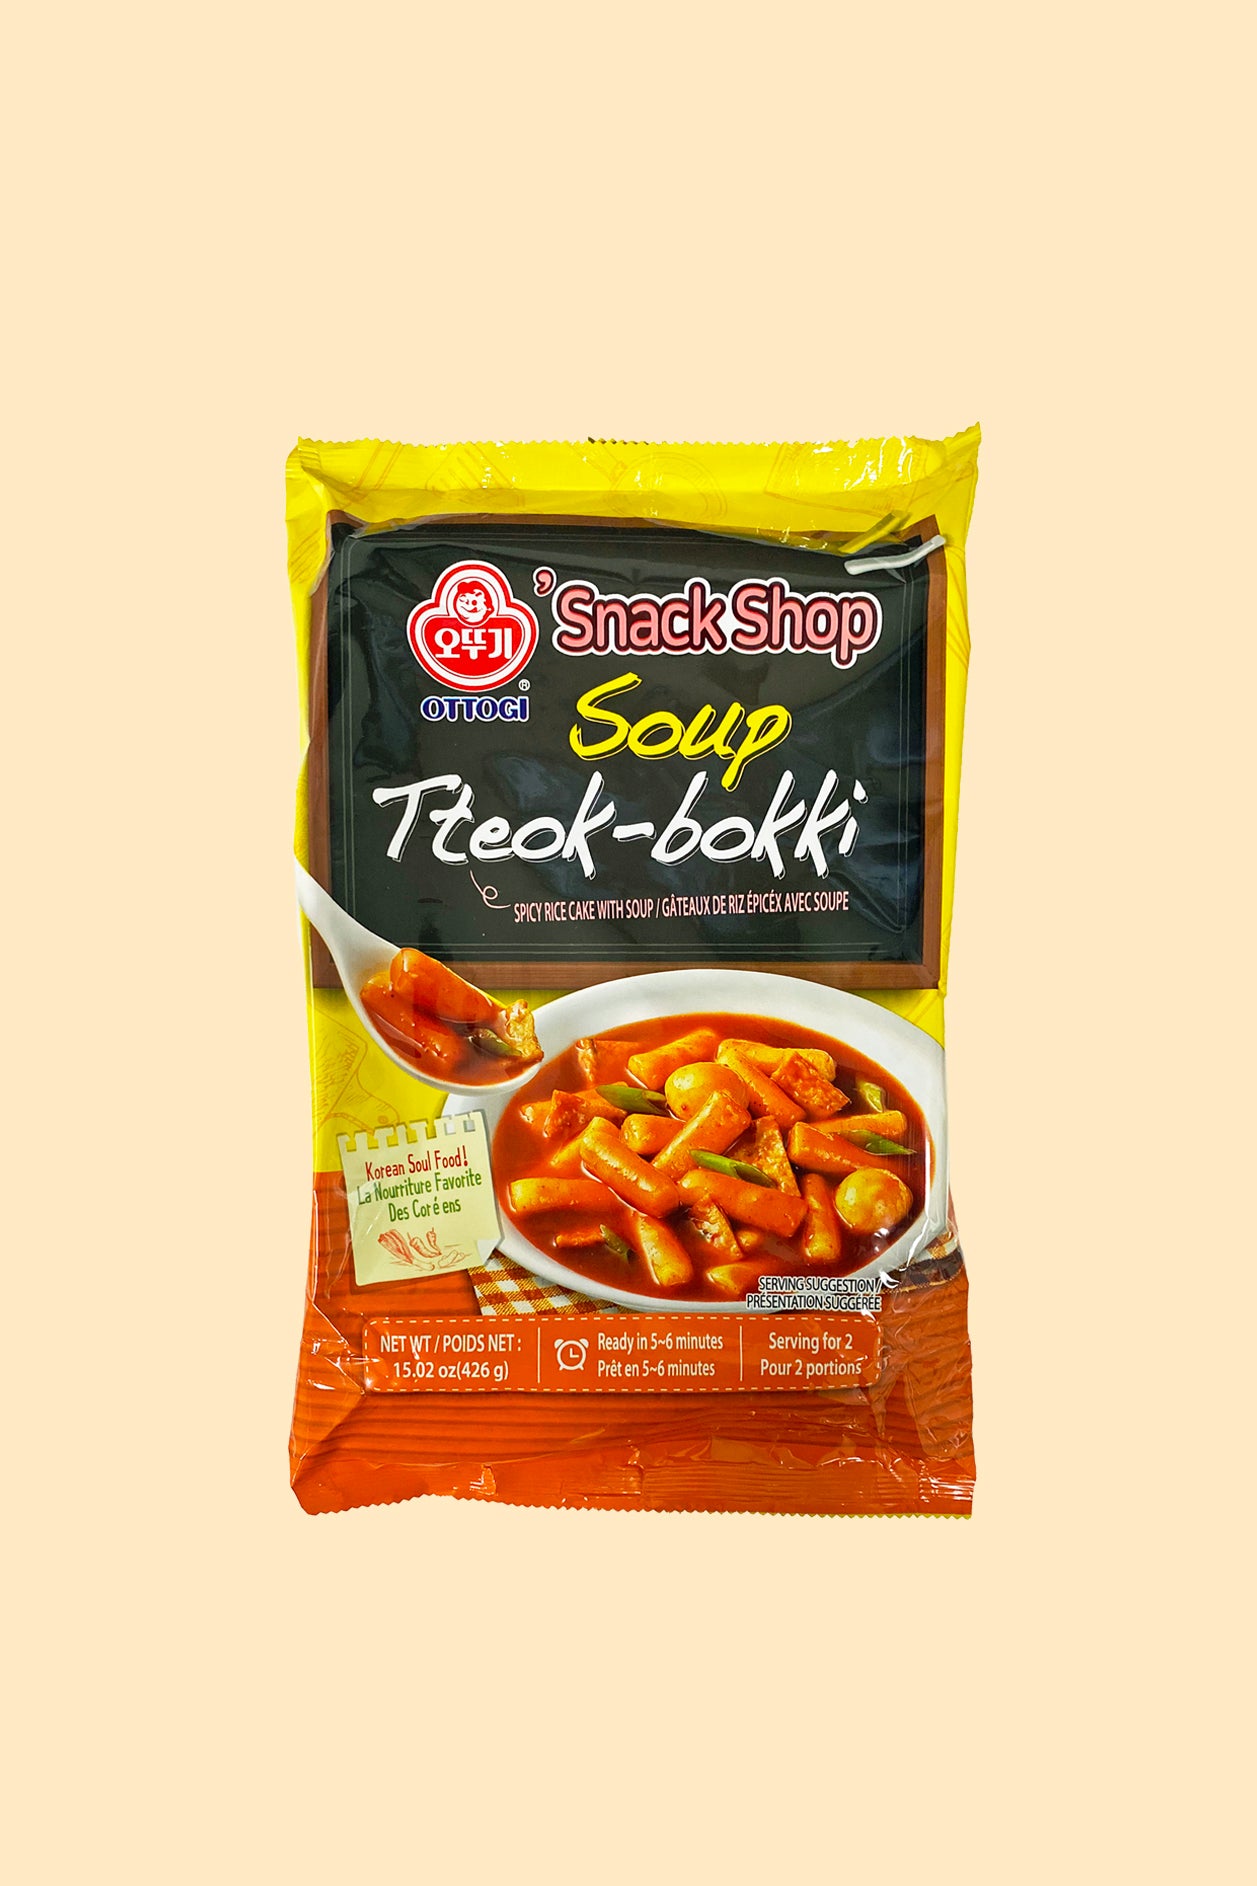 Tteok-bokki (Spicy Rice Cake)